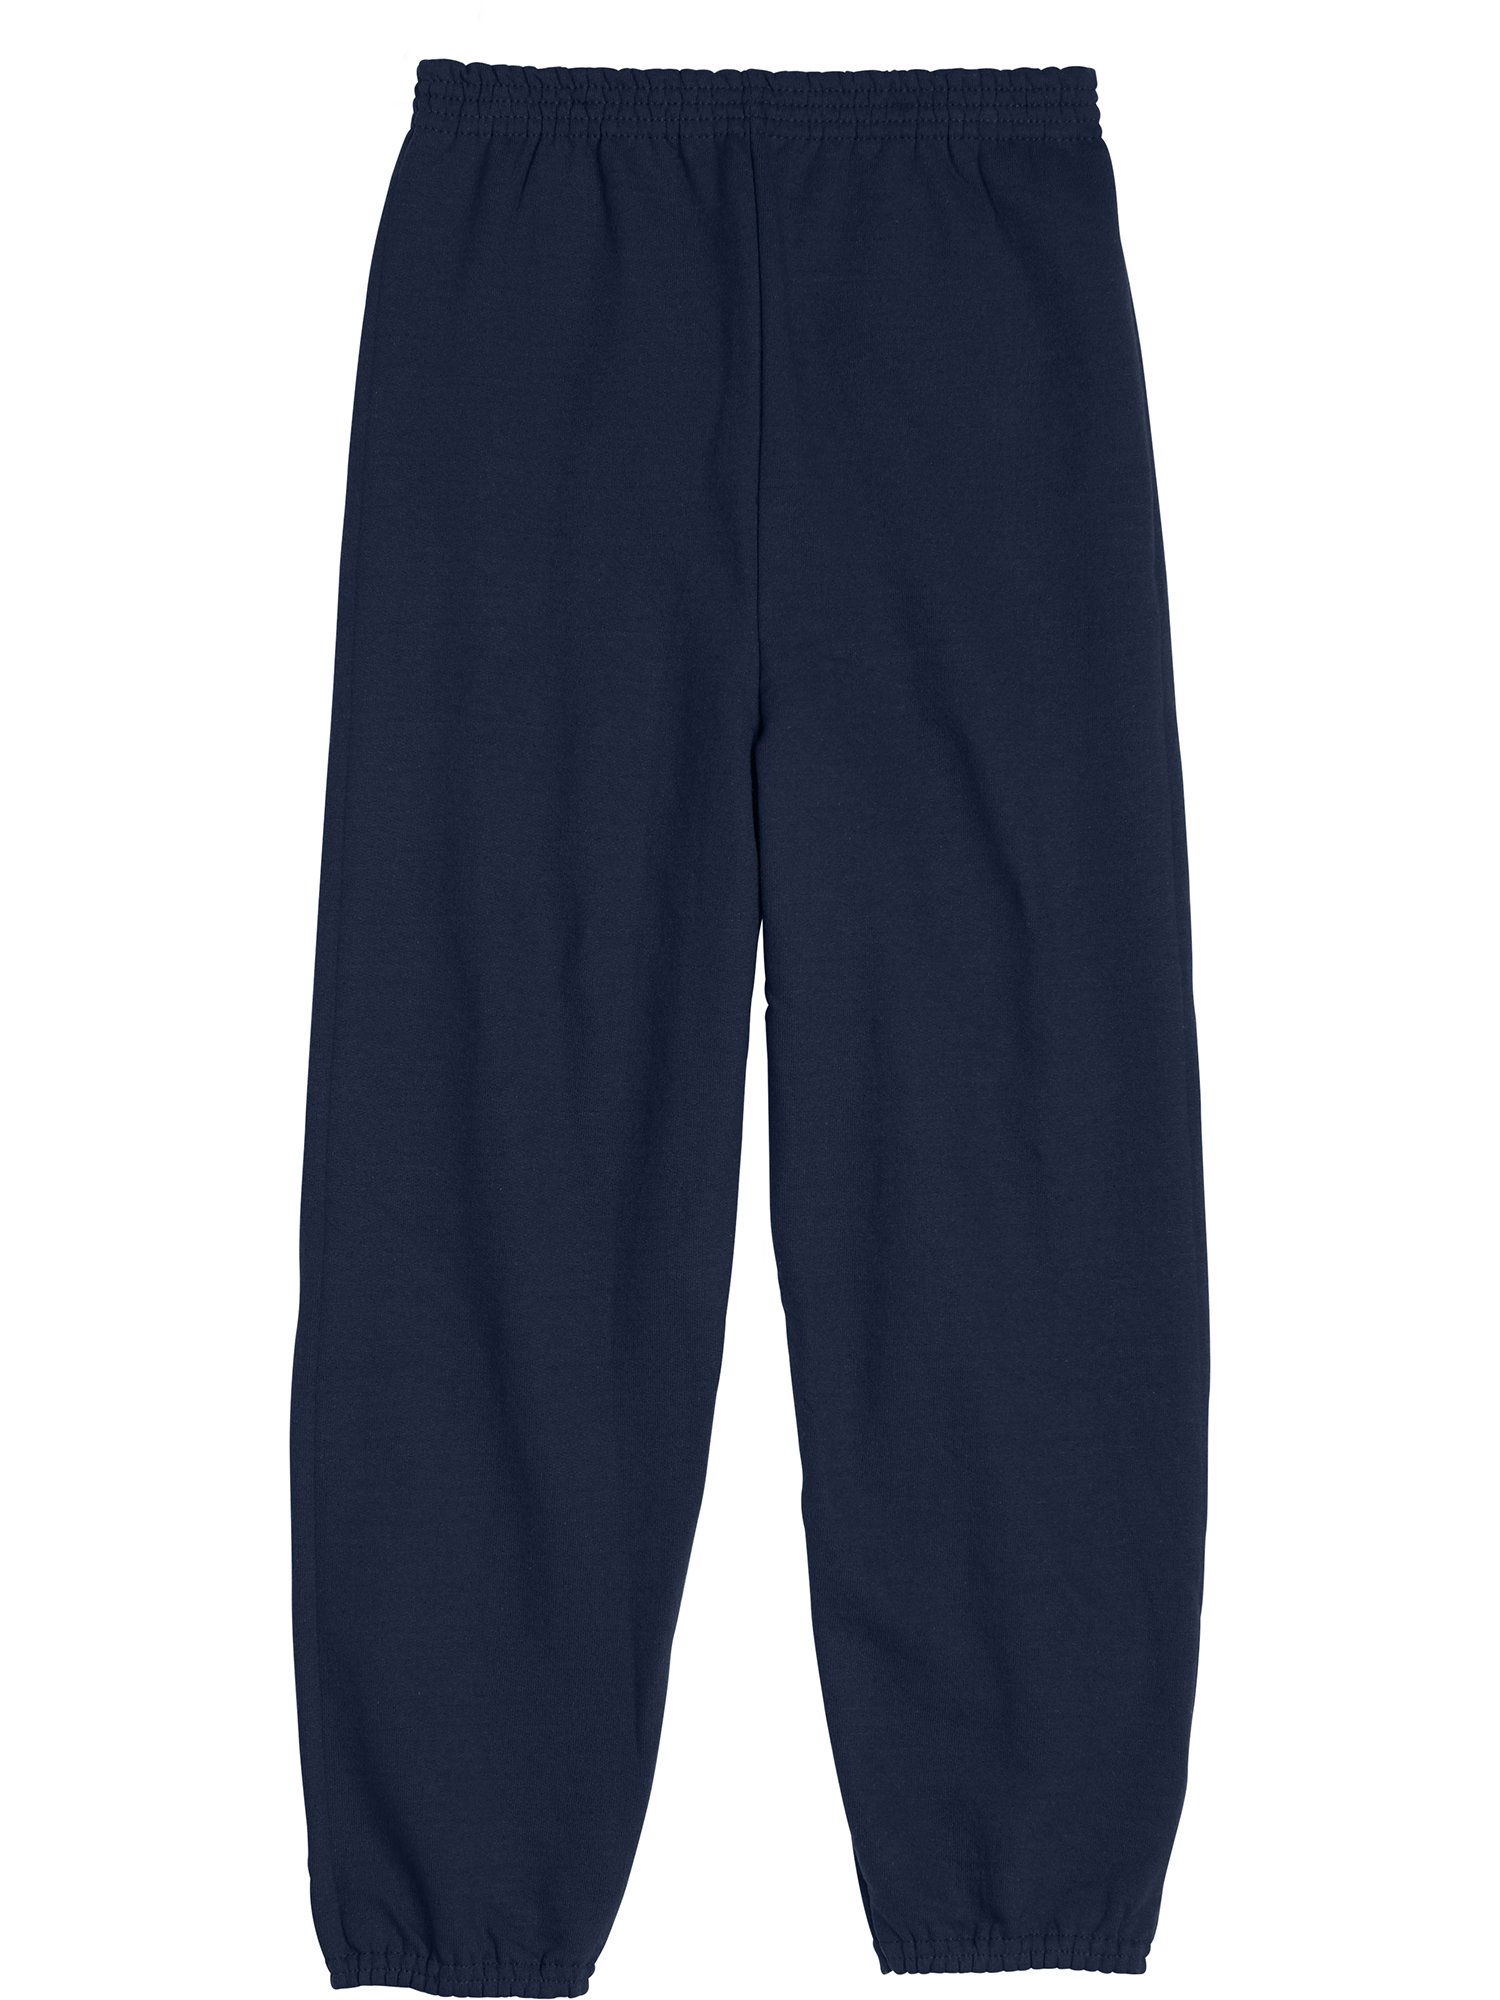 Hanes Boys EcoSmart Active Fleece Sweatpant, Sizes XS-XL - image 1 of 5